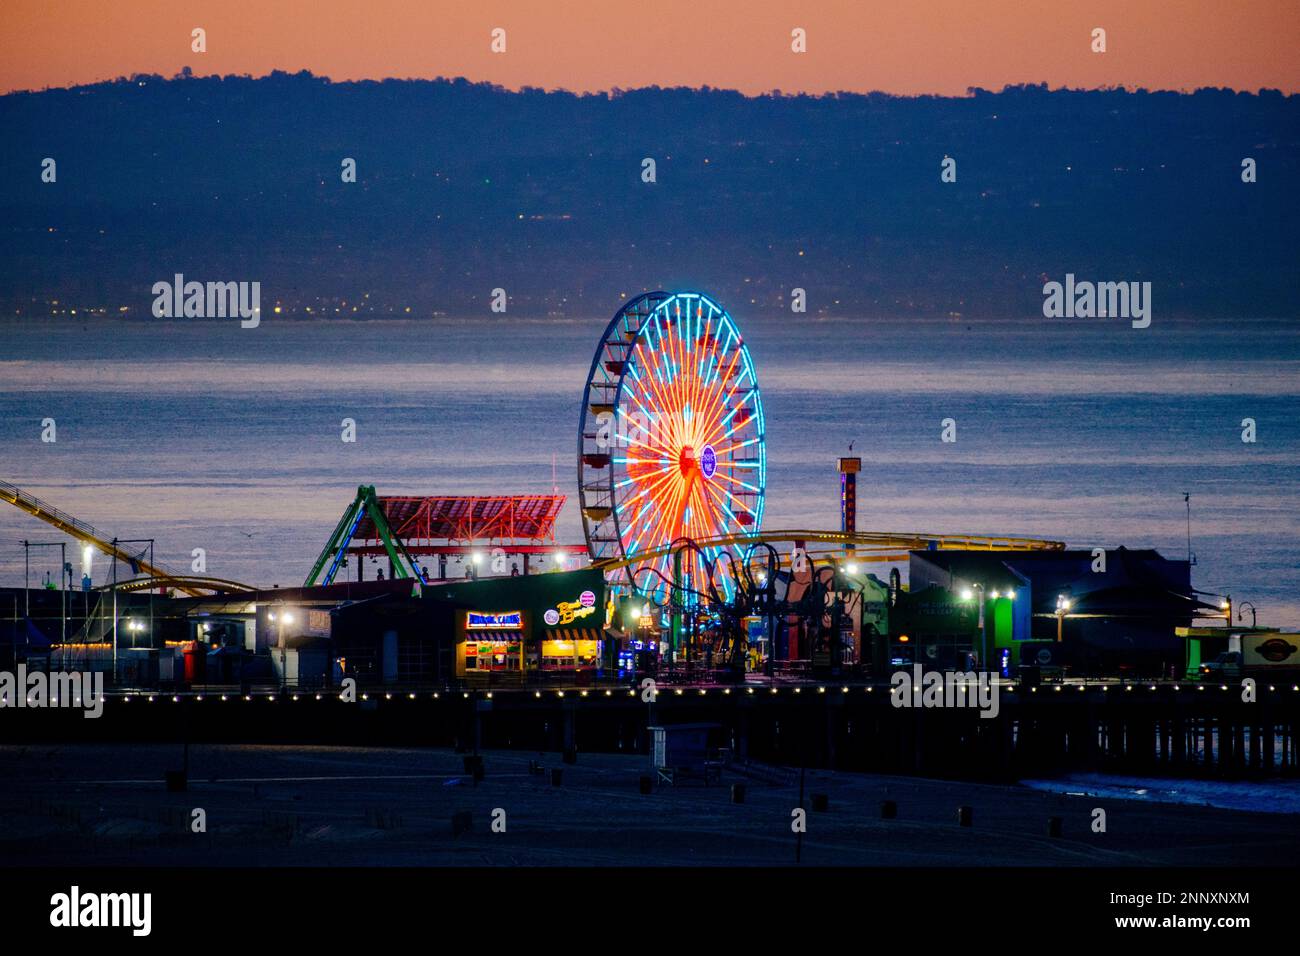 Illuminated Ferris wheel at sunset, Santa Monica, California, USA Stock Photo